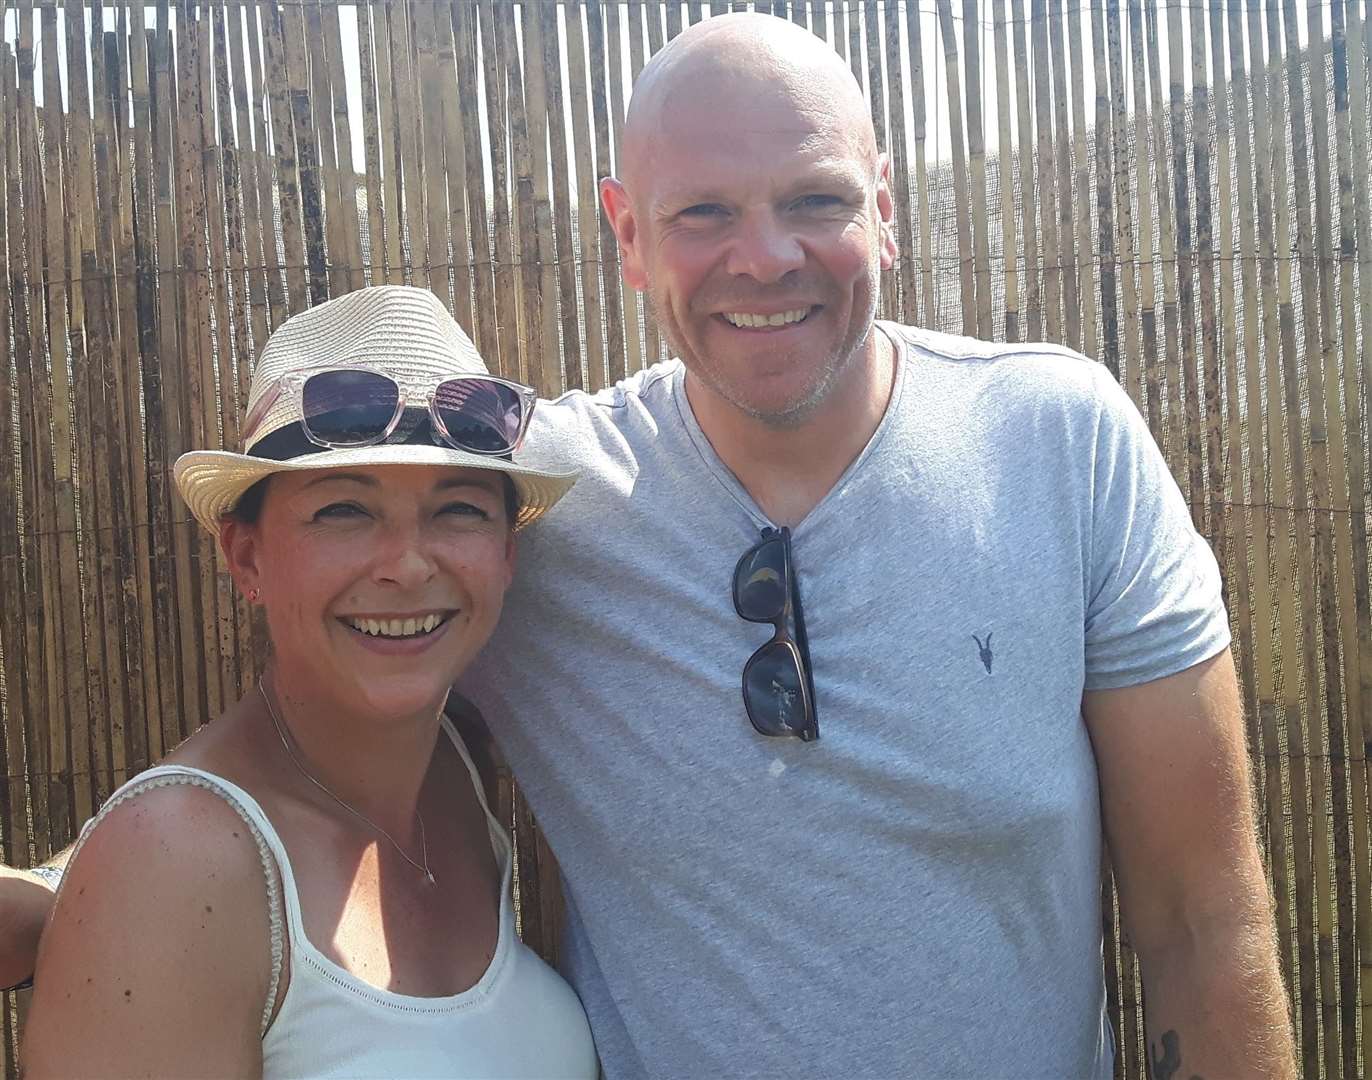 KM news editor Nikki White with chef Tom Kerridge at Pub in the Park, Tunbridge Wells, in July 2018